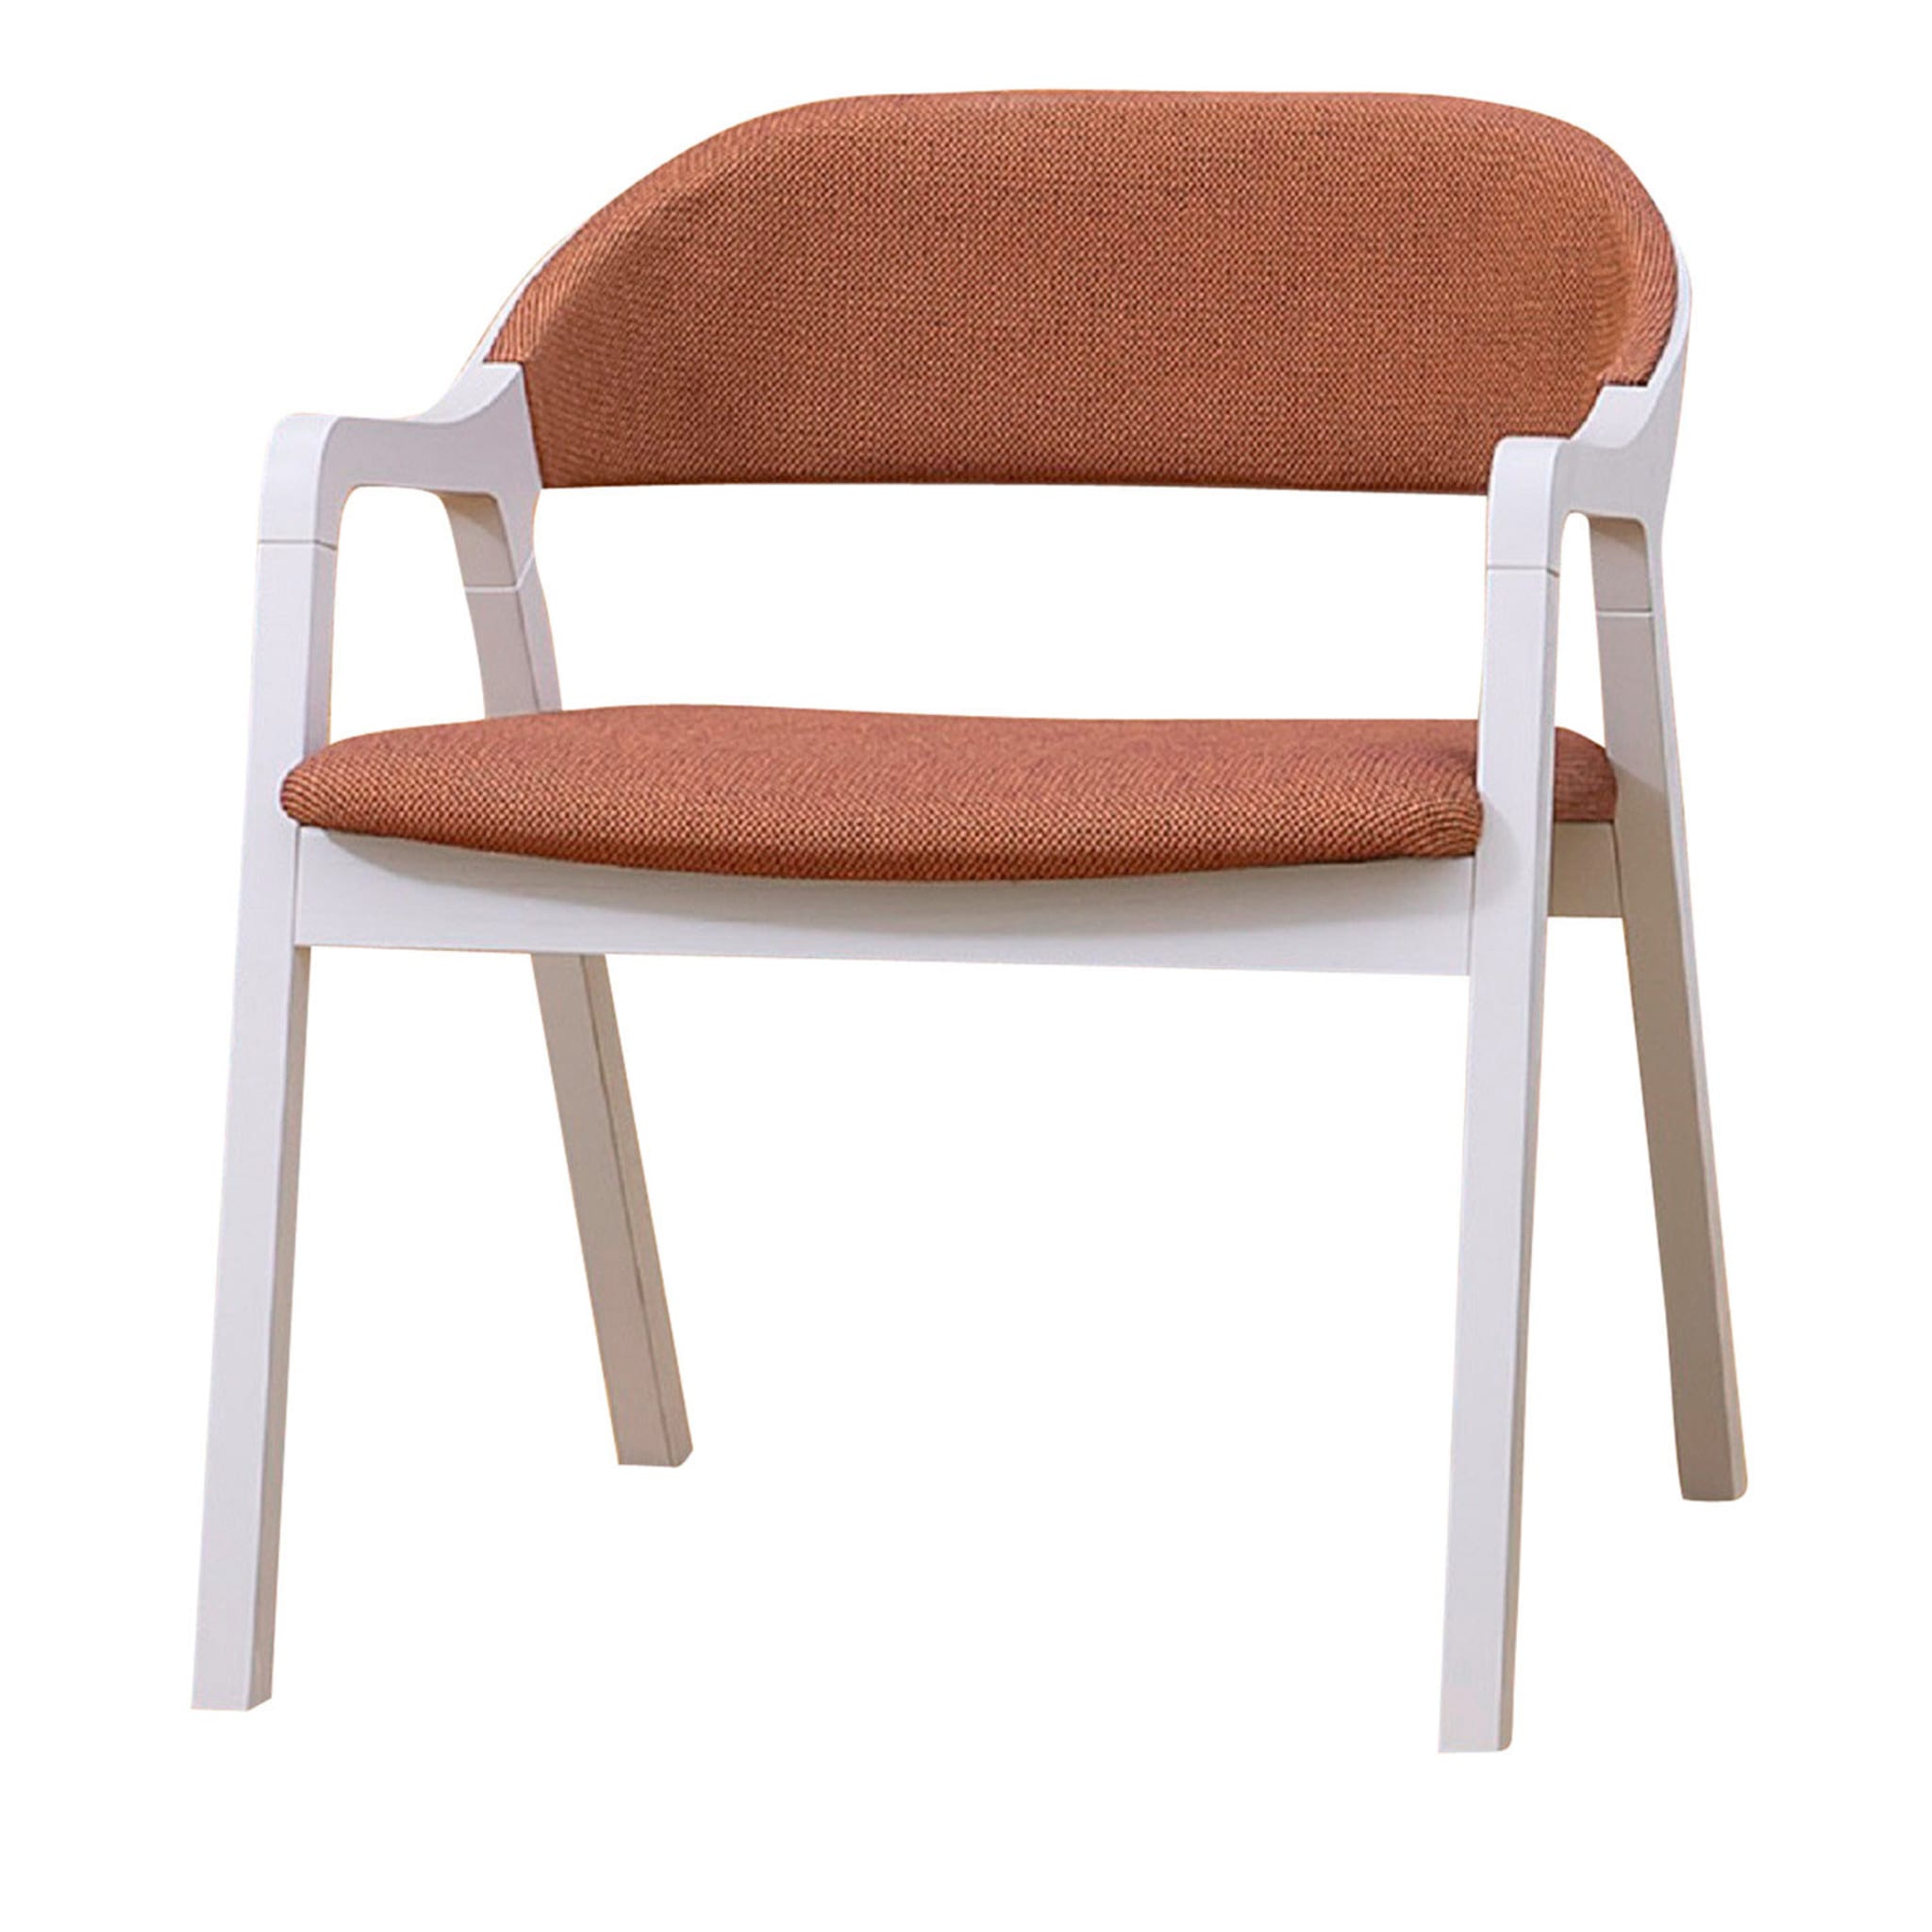 Layer Lounge Chair by Michael Geldmacher - Main view